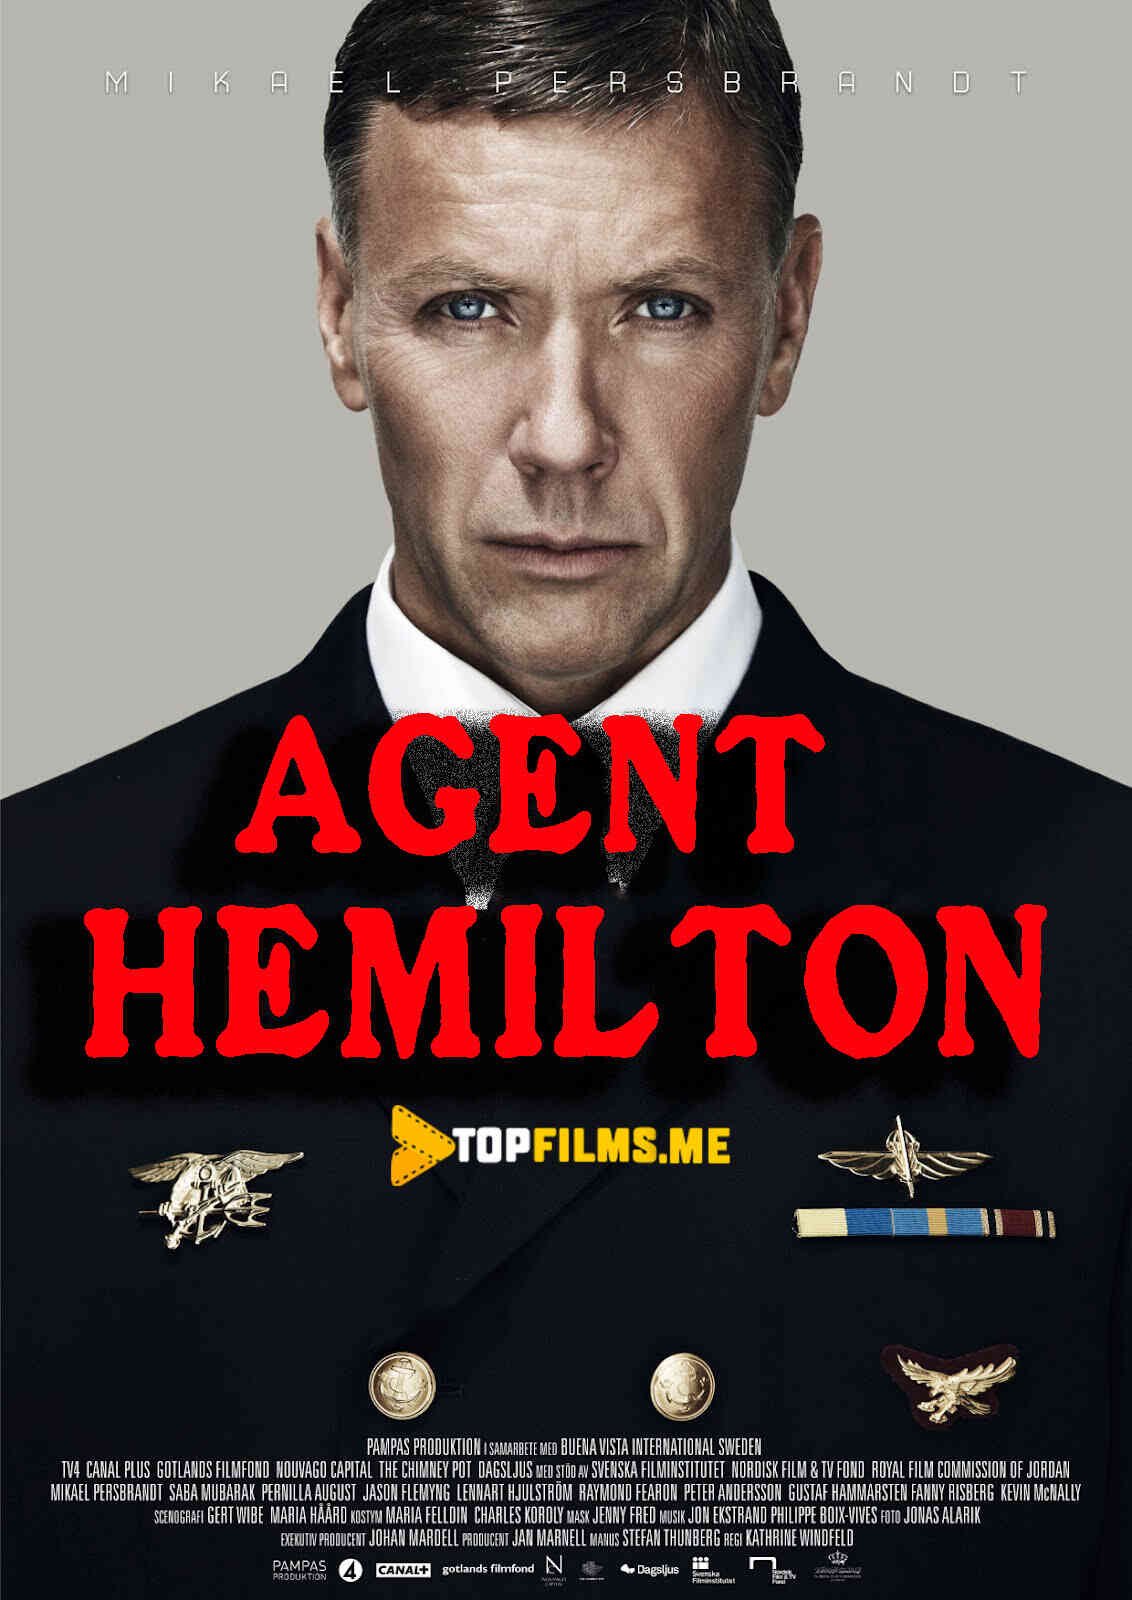 Agent Hemilton / Josus Xemilton Uzbek tilida